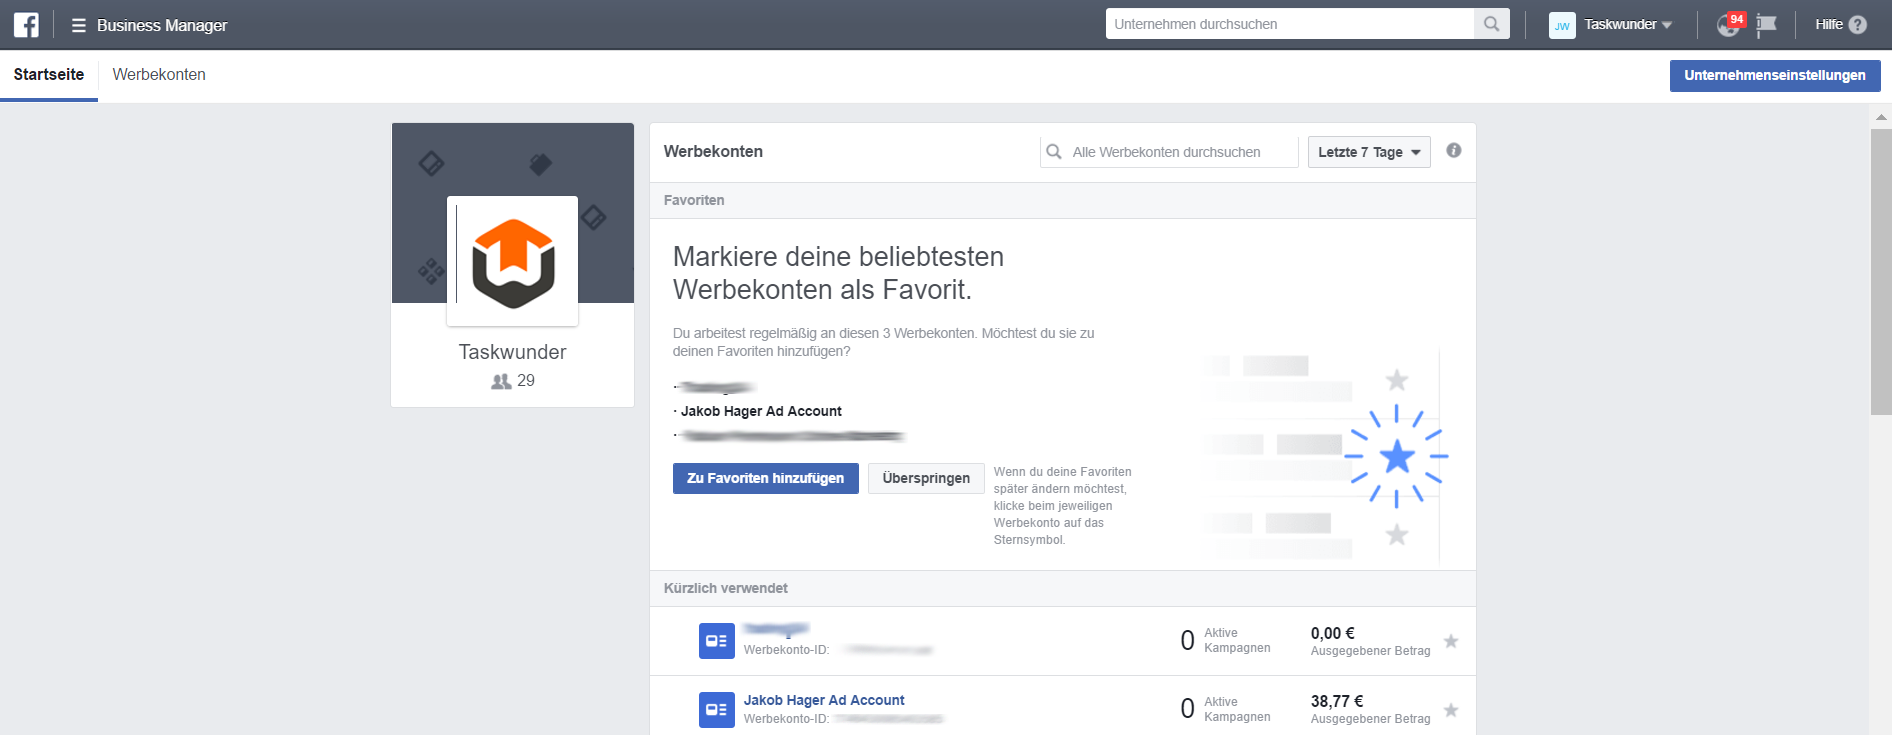 Facebook Business Manager Dashboard